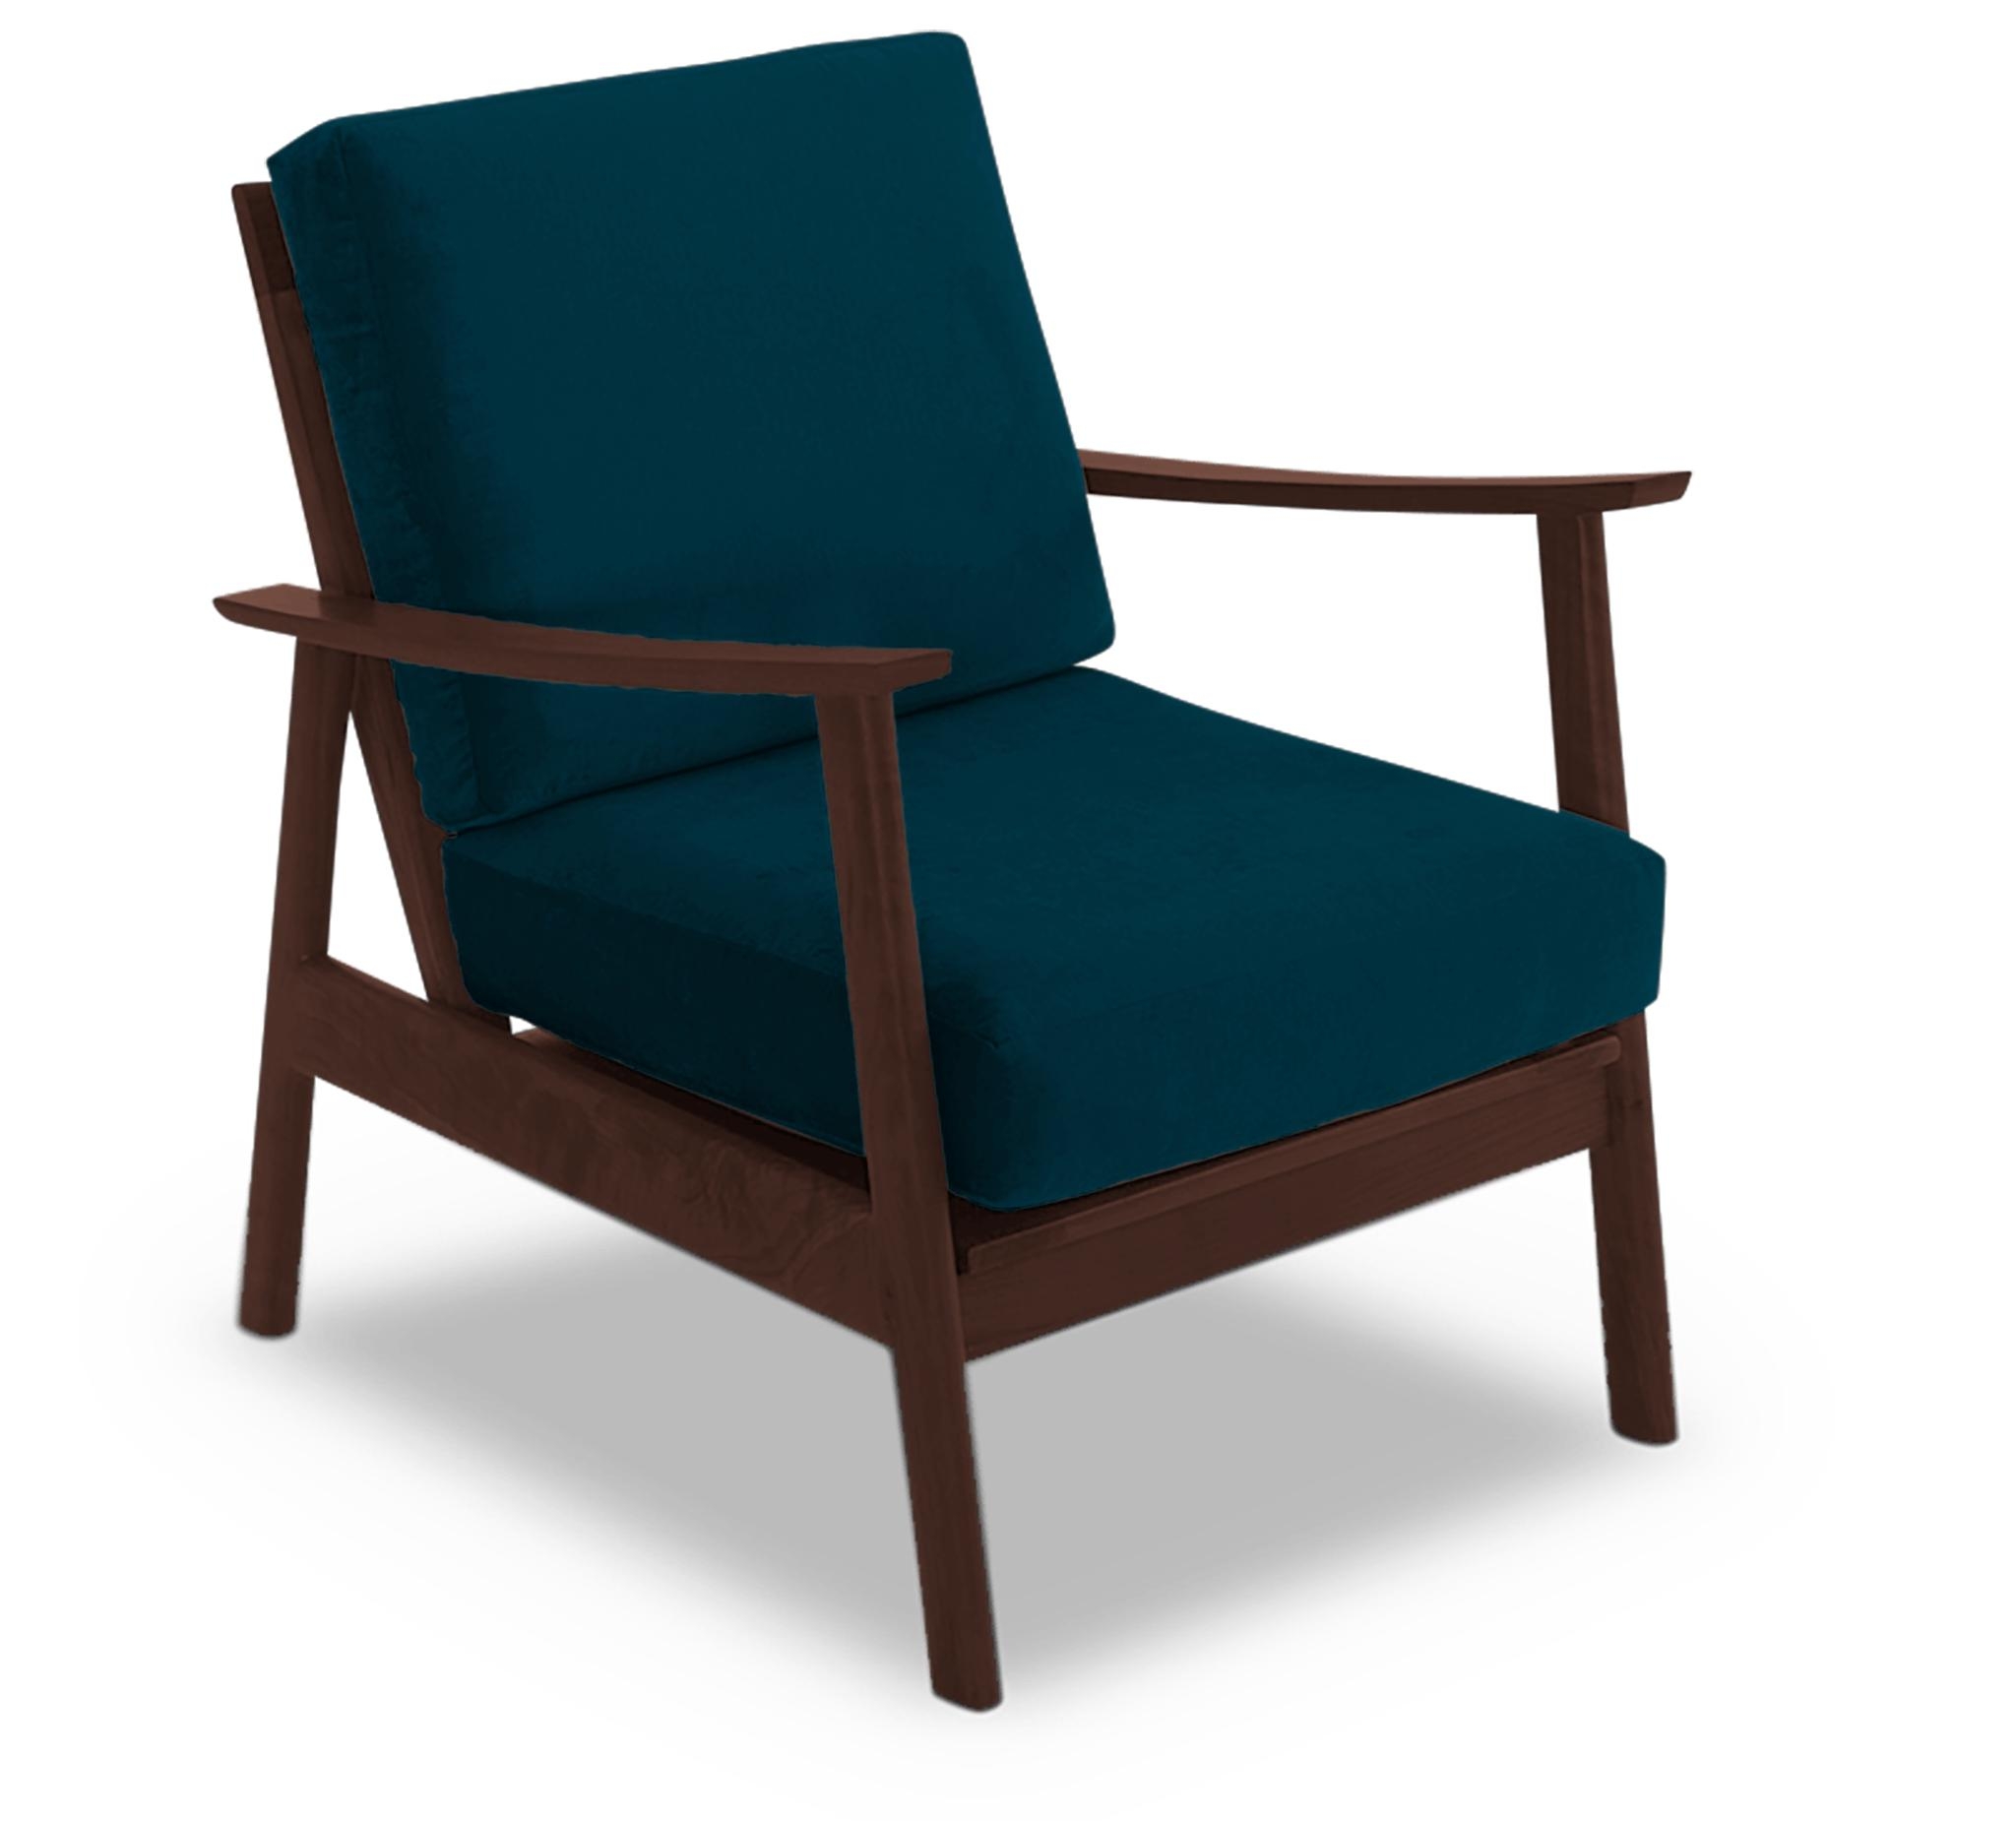 Blue Paley Mid Century Modern Chair - Key Largo Zenith Teal - Walnut - Image 1